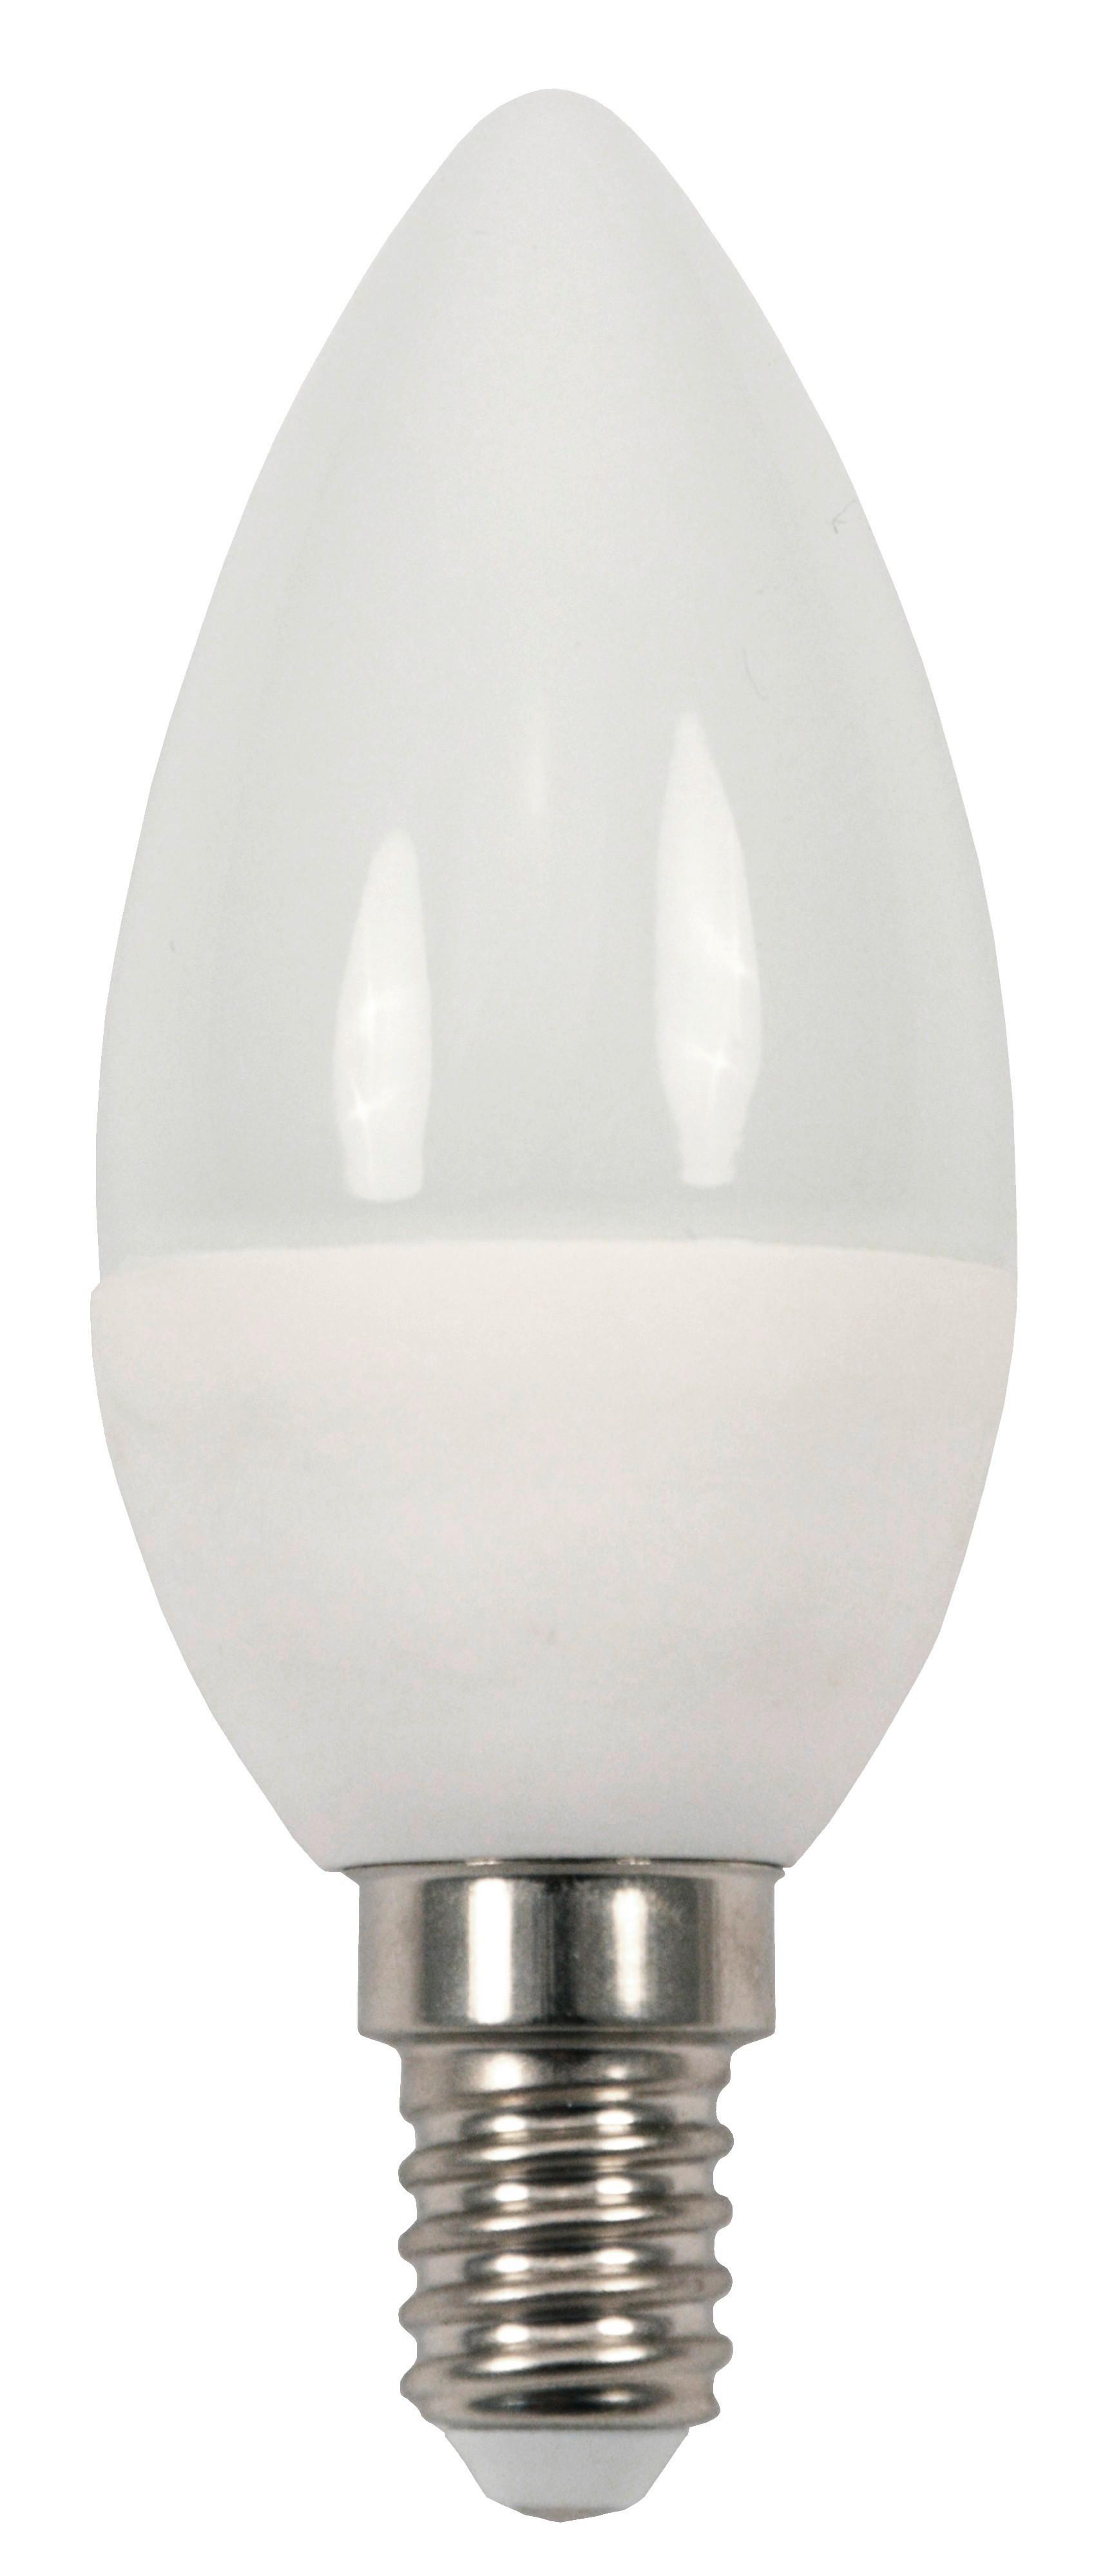 Leuchtmittel C80195MM max. 4 Watt - Weiß, Keramik/Kunststoff (3,7/9,9cm) - Modern Living